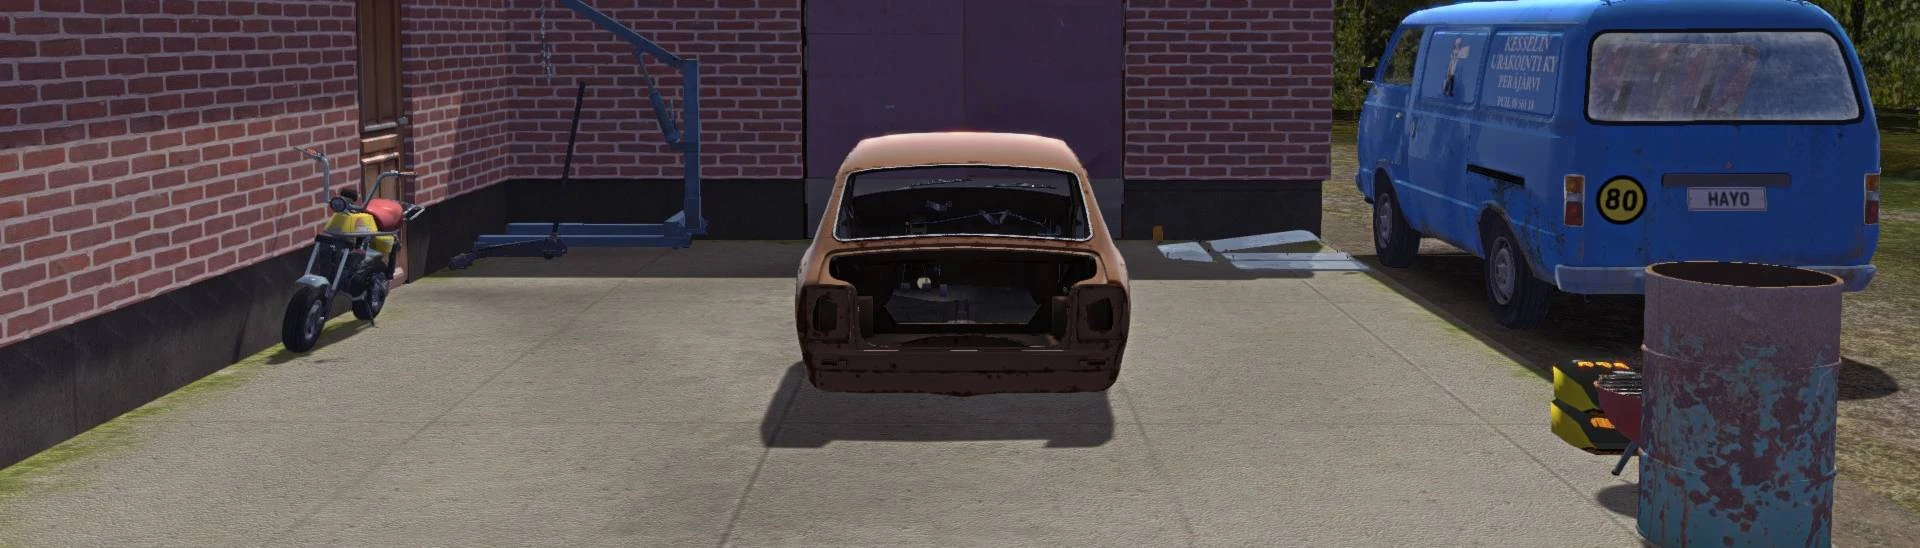 My Summer Car at My Garage Nexus - Mods and Community